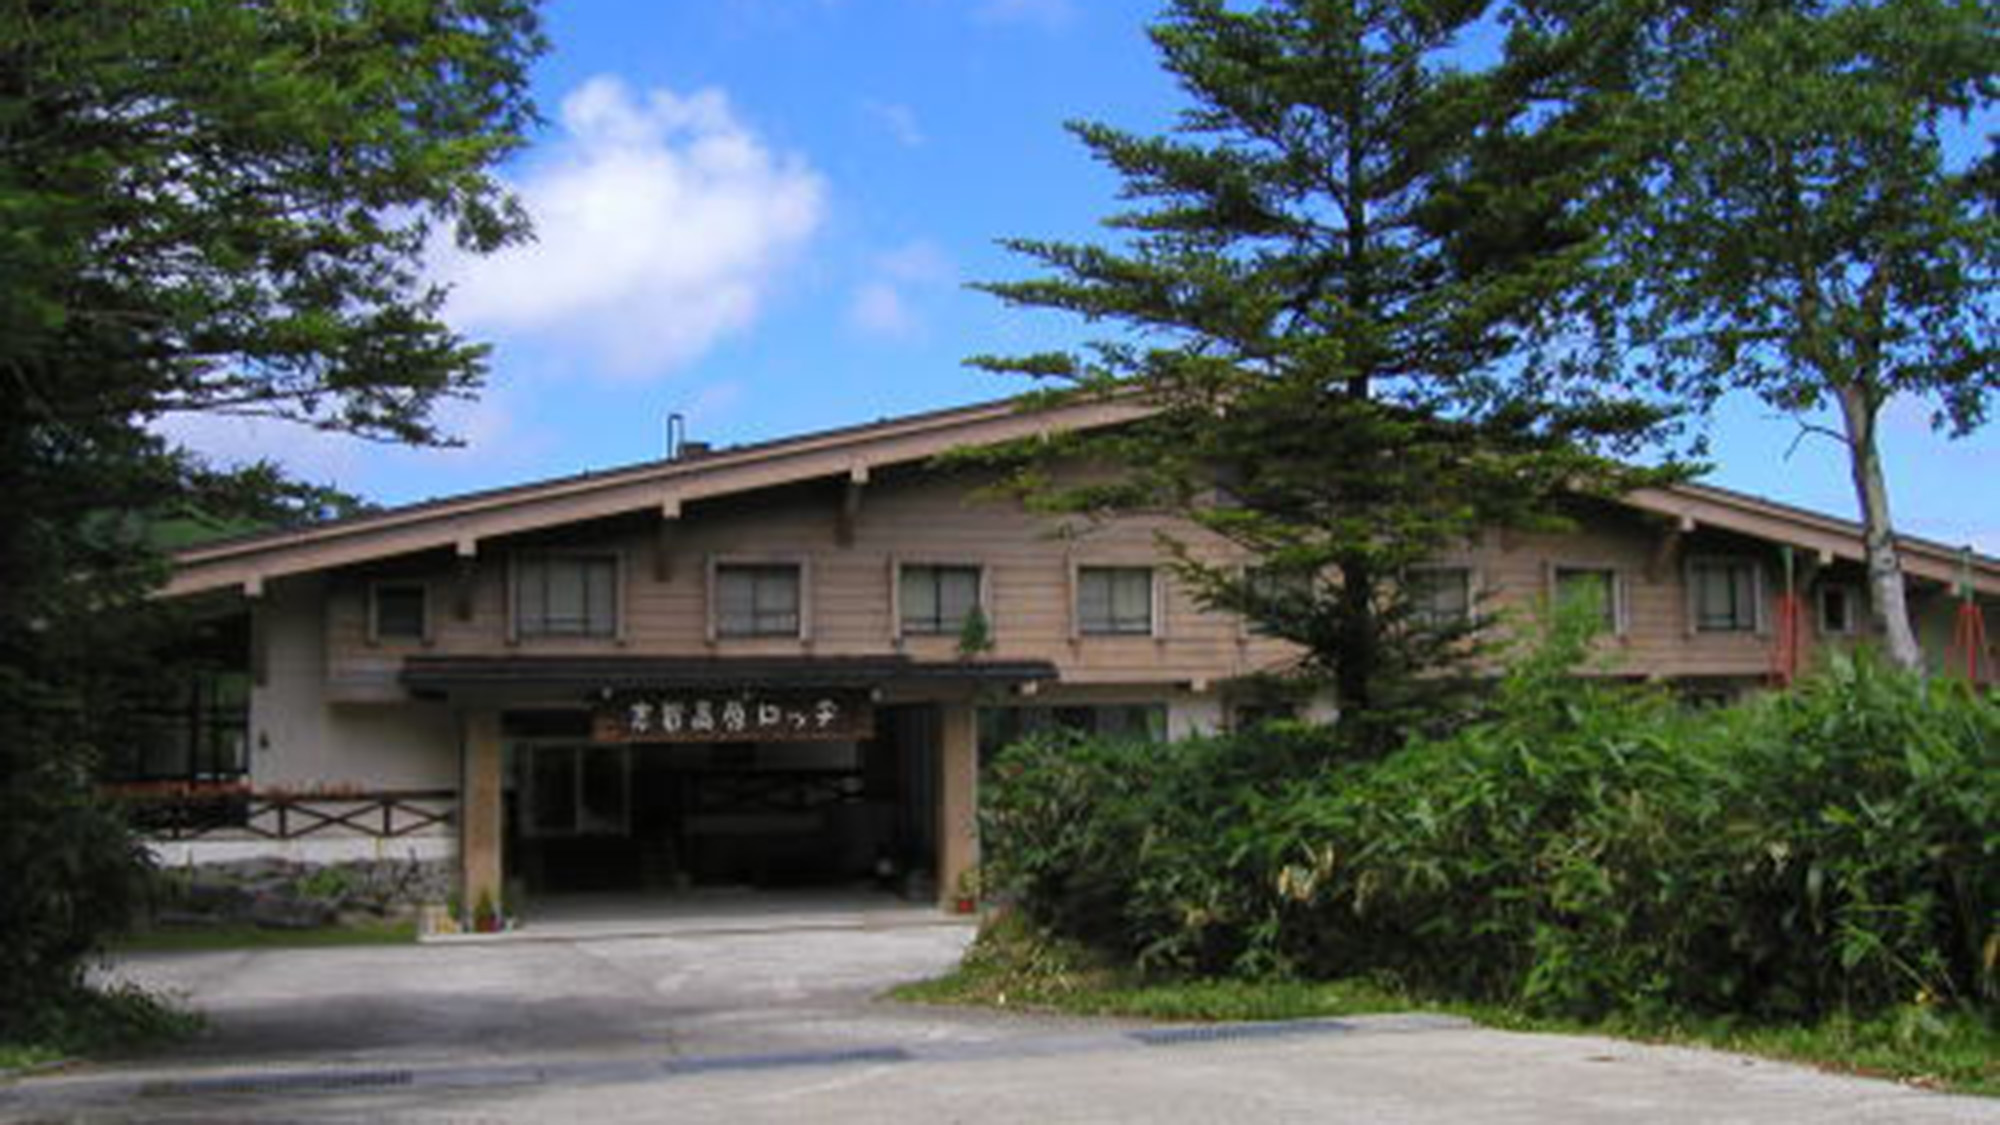 Shigakogen Lodge